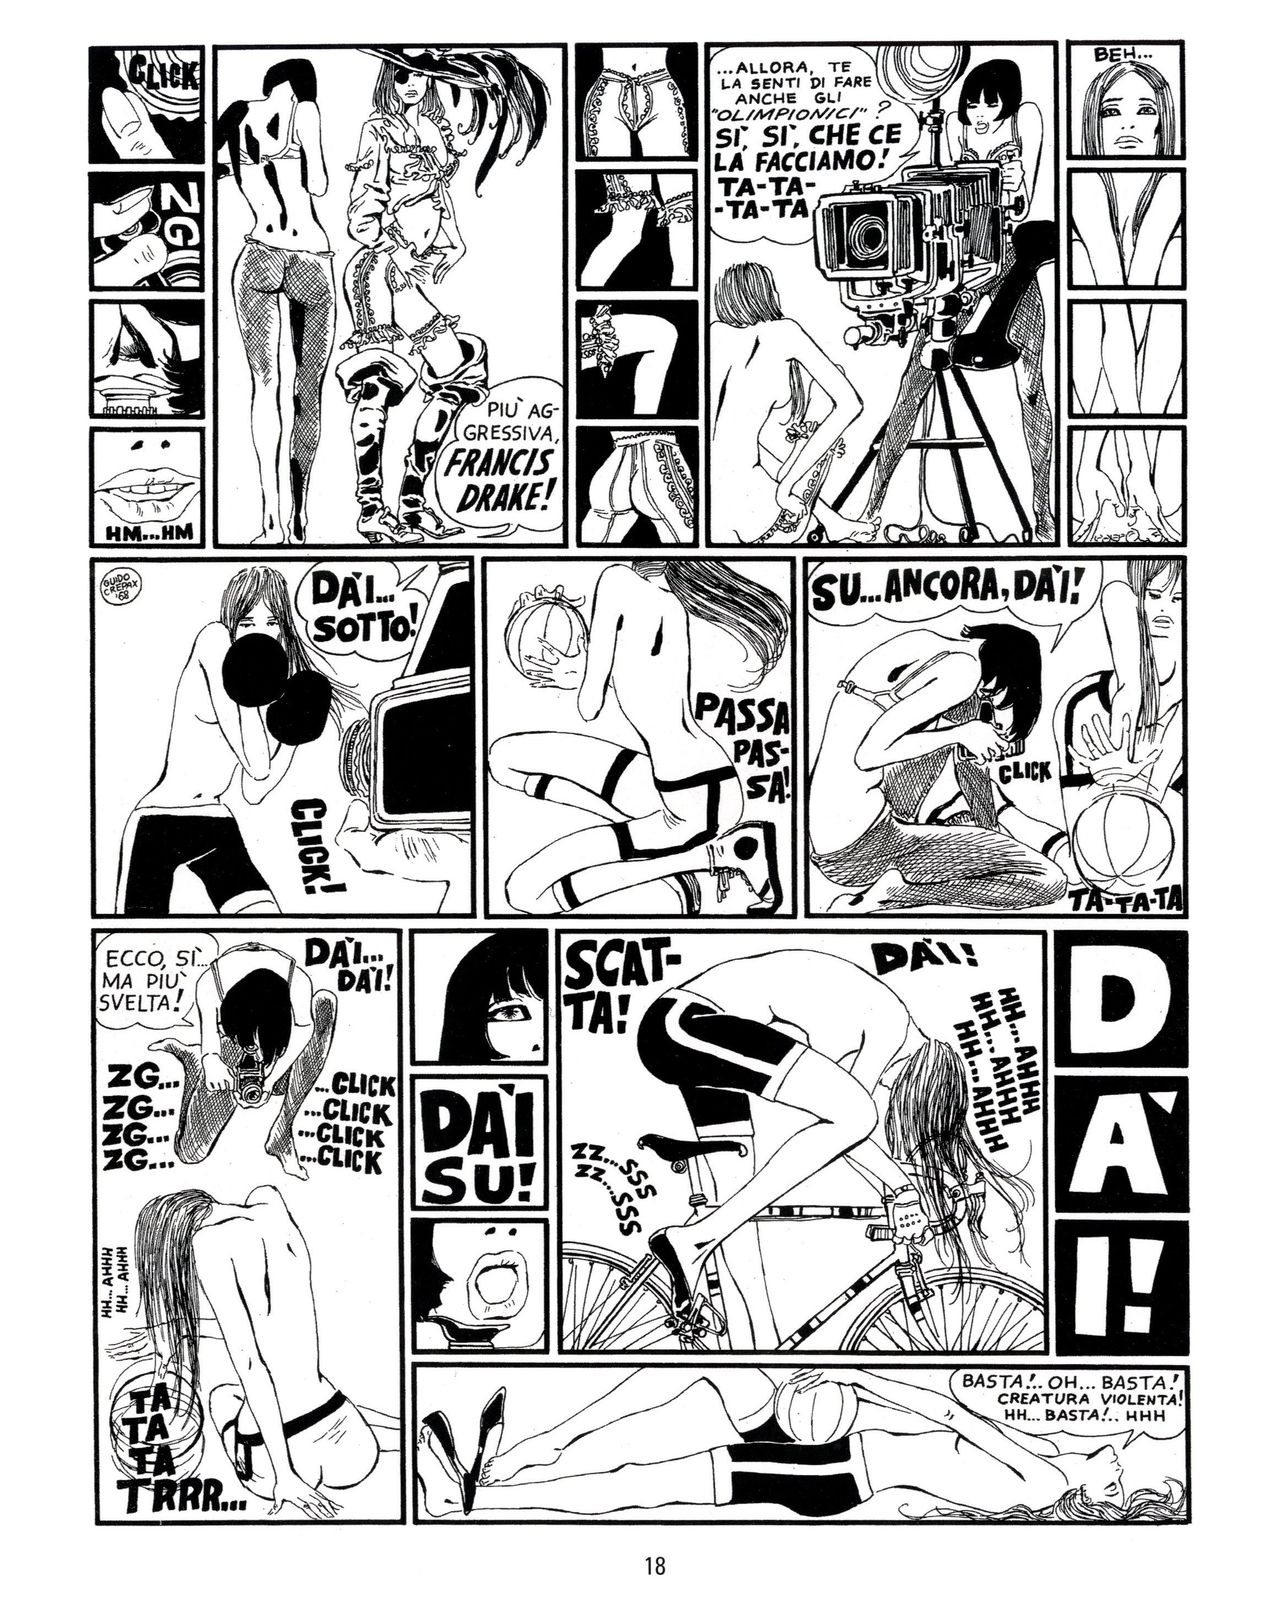 [Guido Crepax] Erotica Fumetti #25 : L'ascesa dei sotterranei : I cavalieri ciechi [Italian] 21